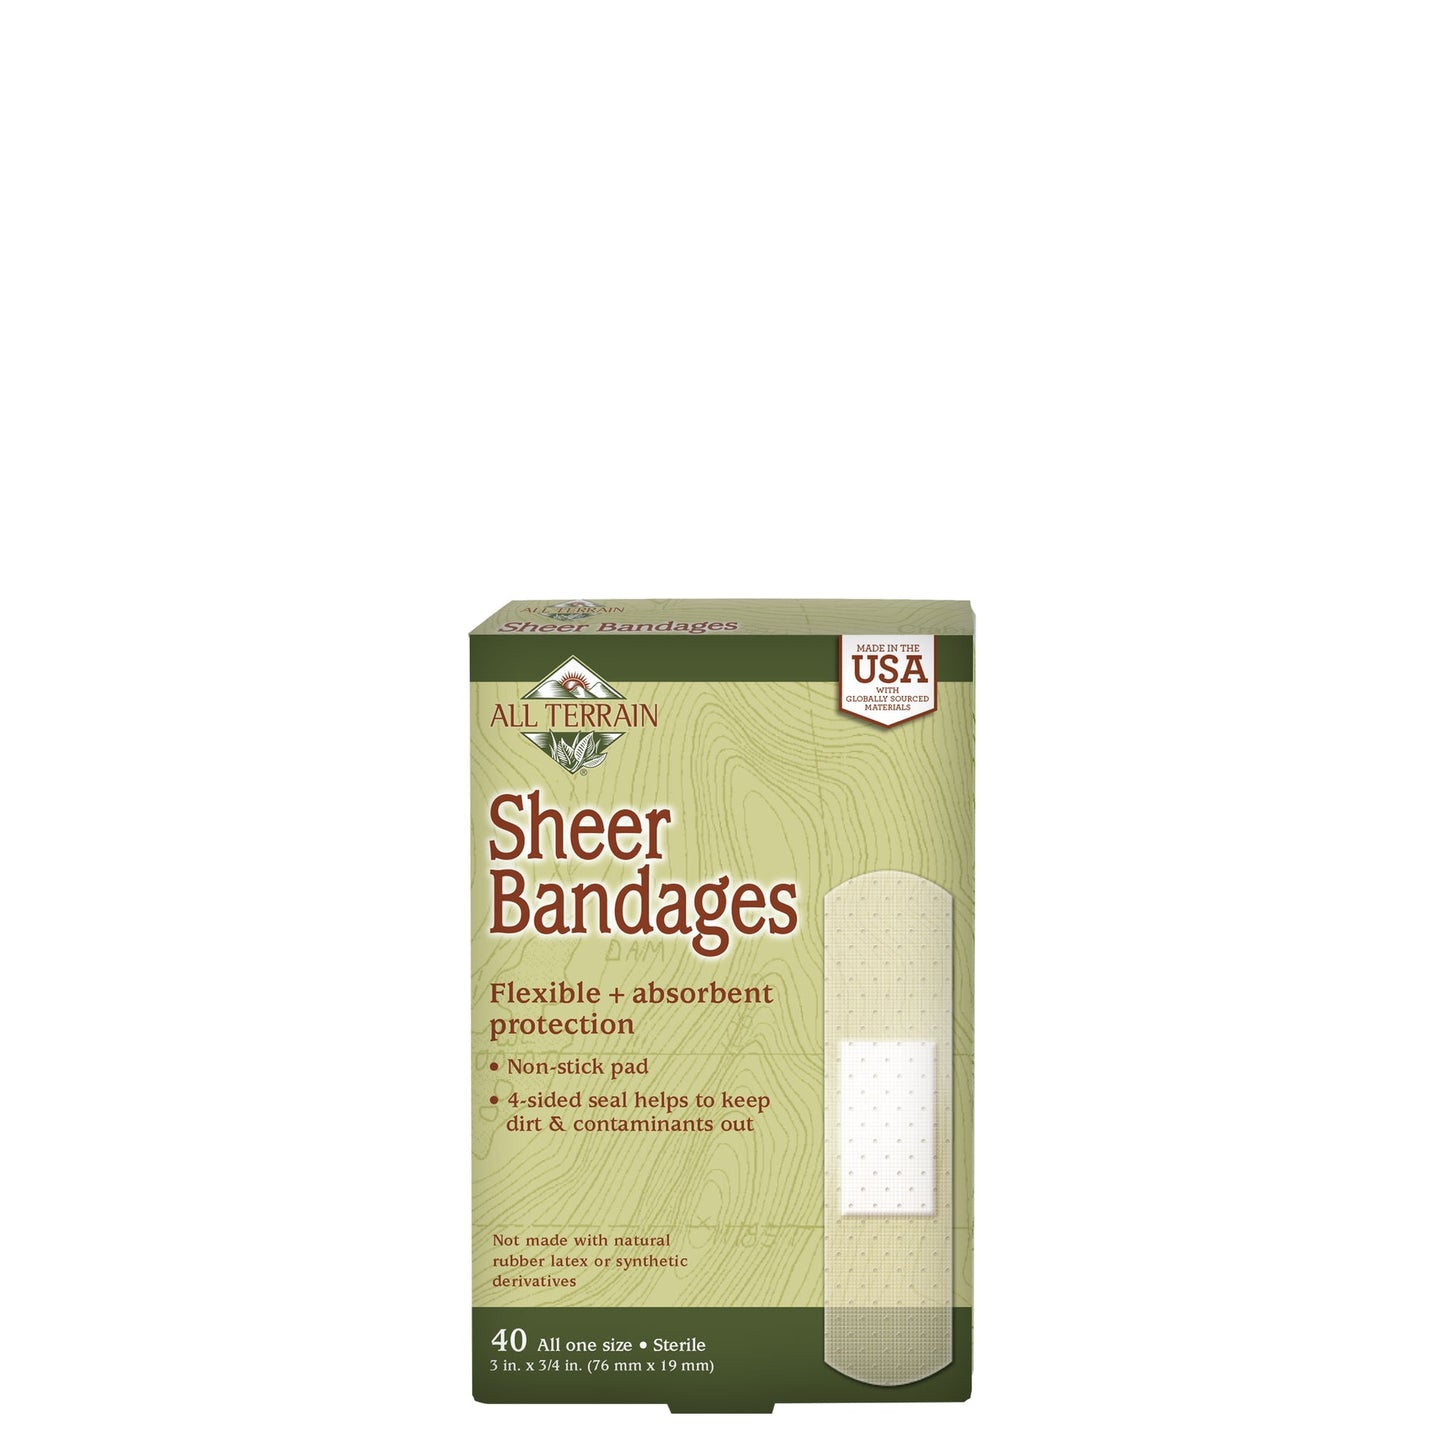 All Terrain Sheer Bandages